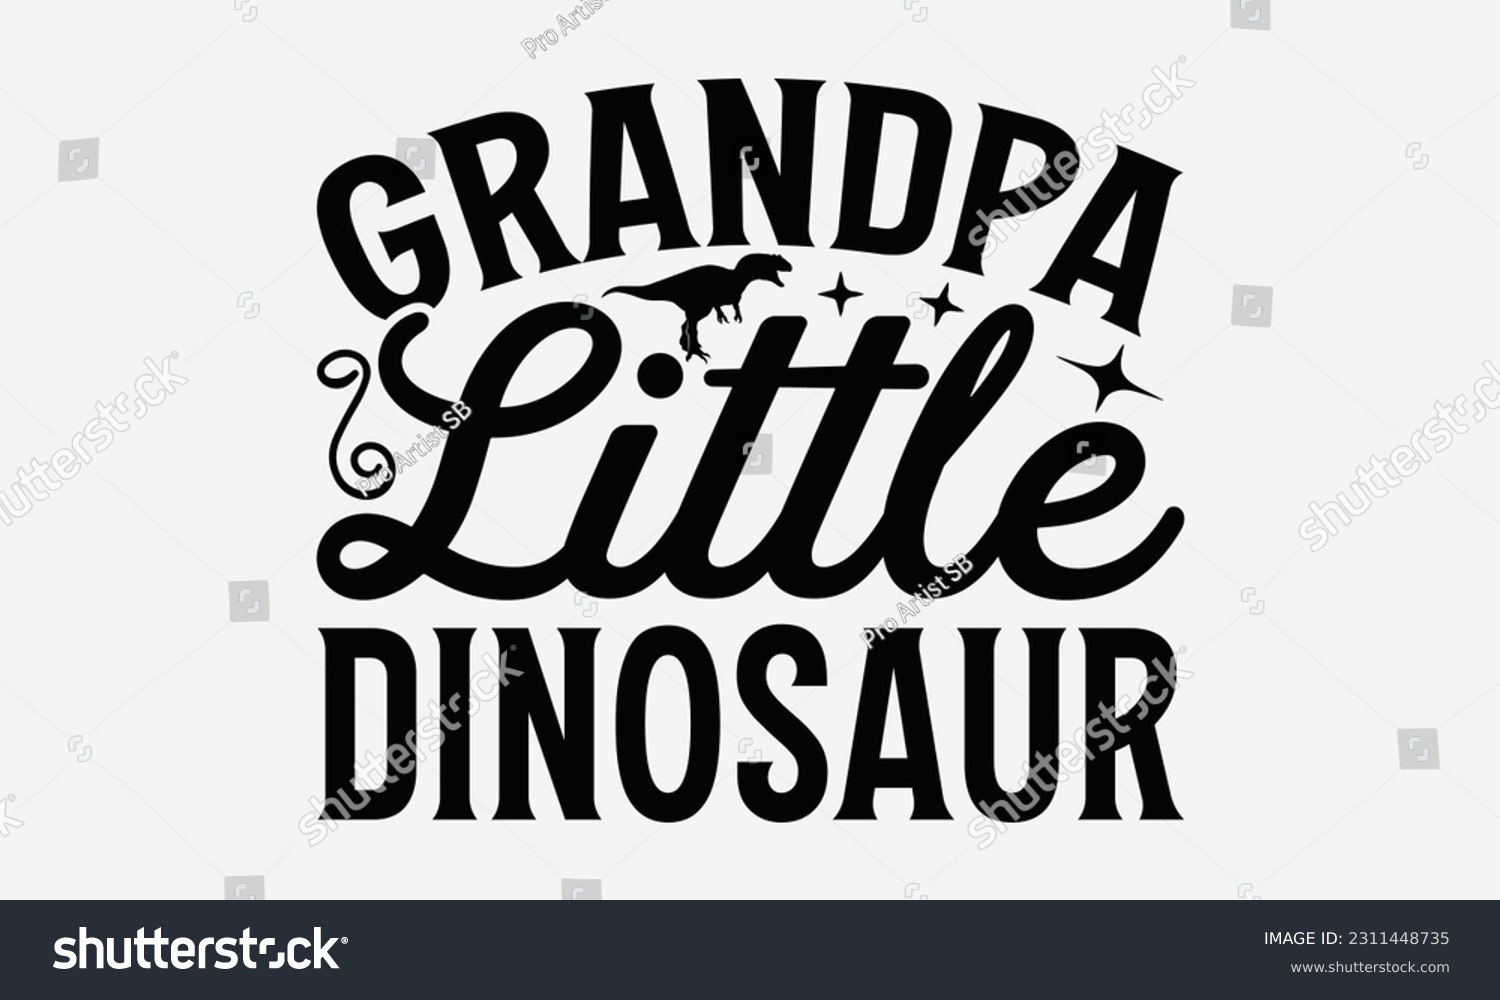 SVG of Grandpa Little Dinosaur - Dinosaur SVG Design, Handmade Calligraphy Vector Illustration, Greeting Card Template With Typography Text. svg